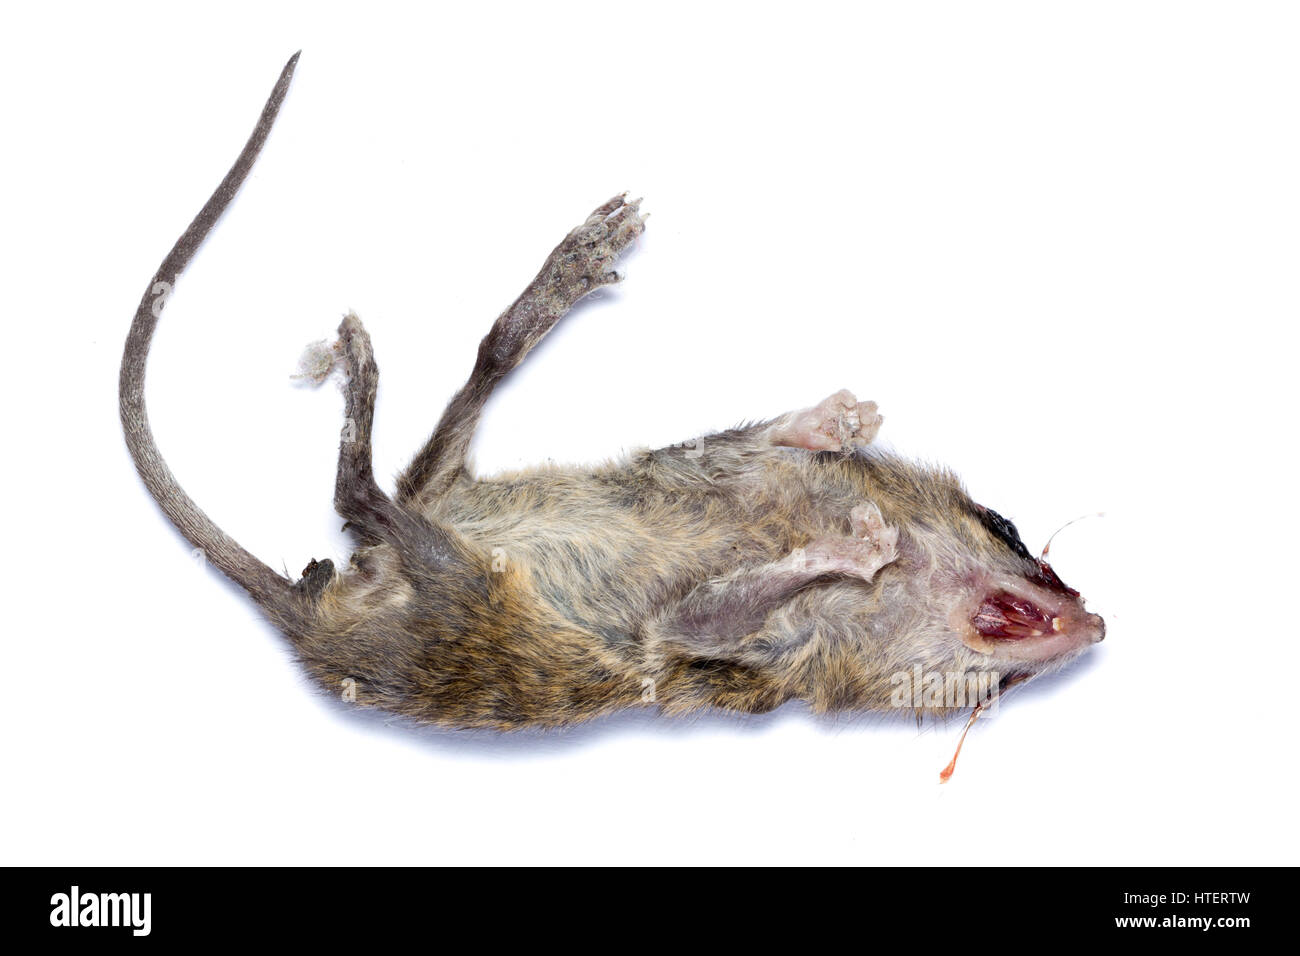 Rata muerta Imágenes recortadas de stock - Alamy